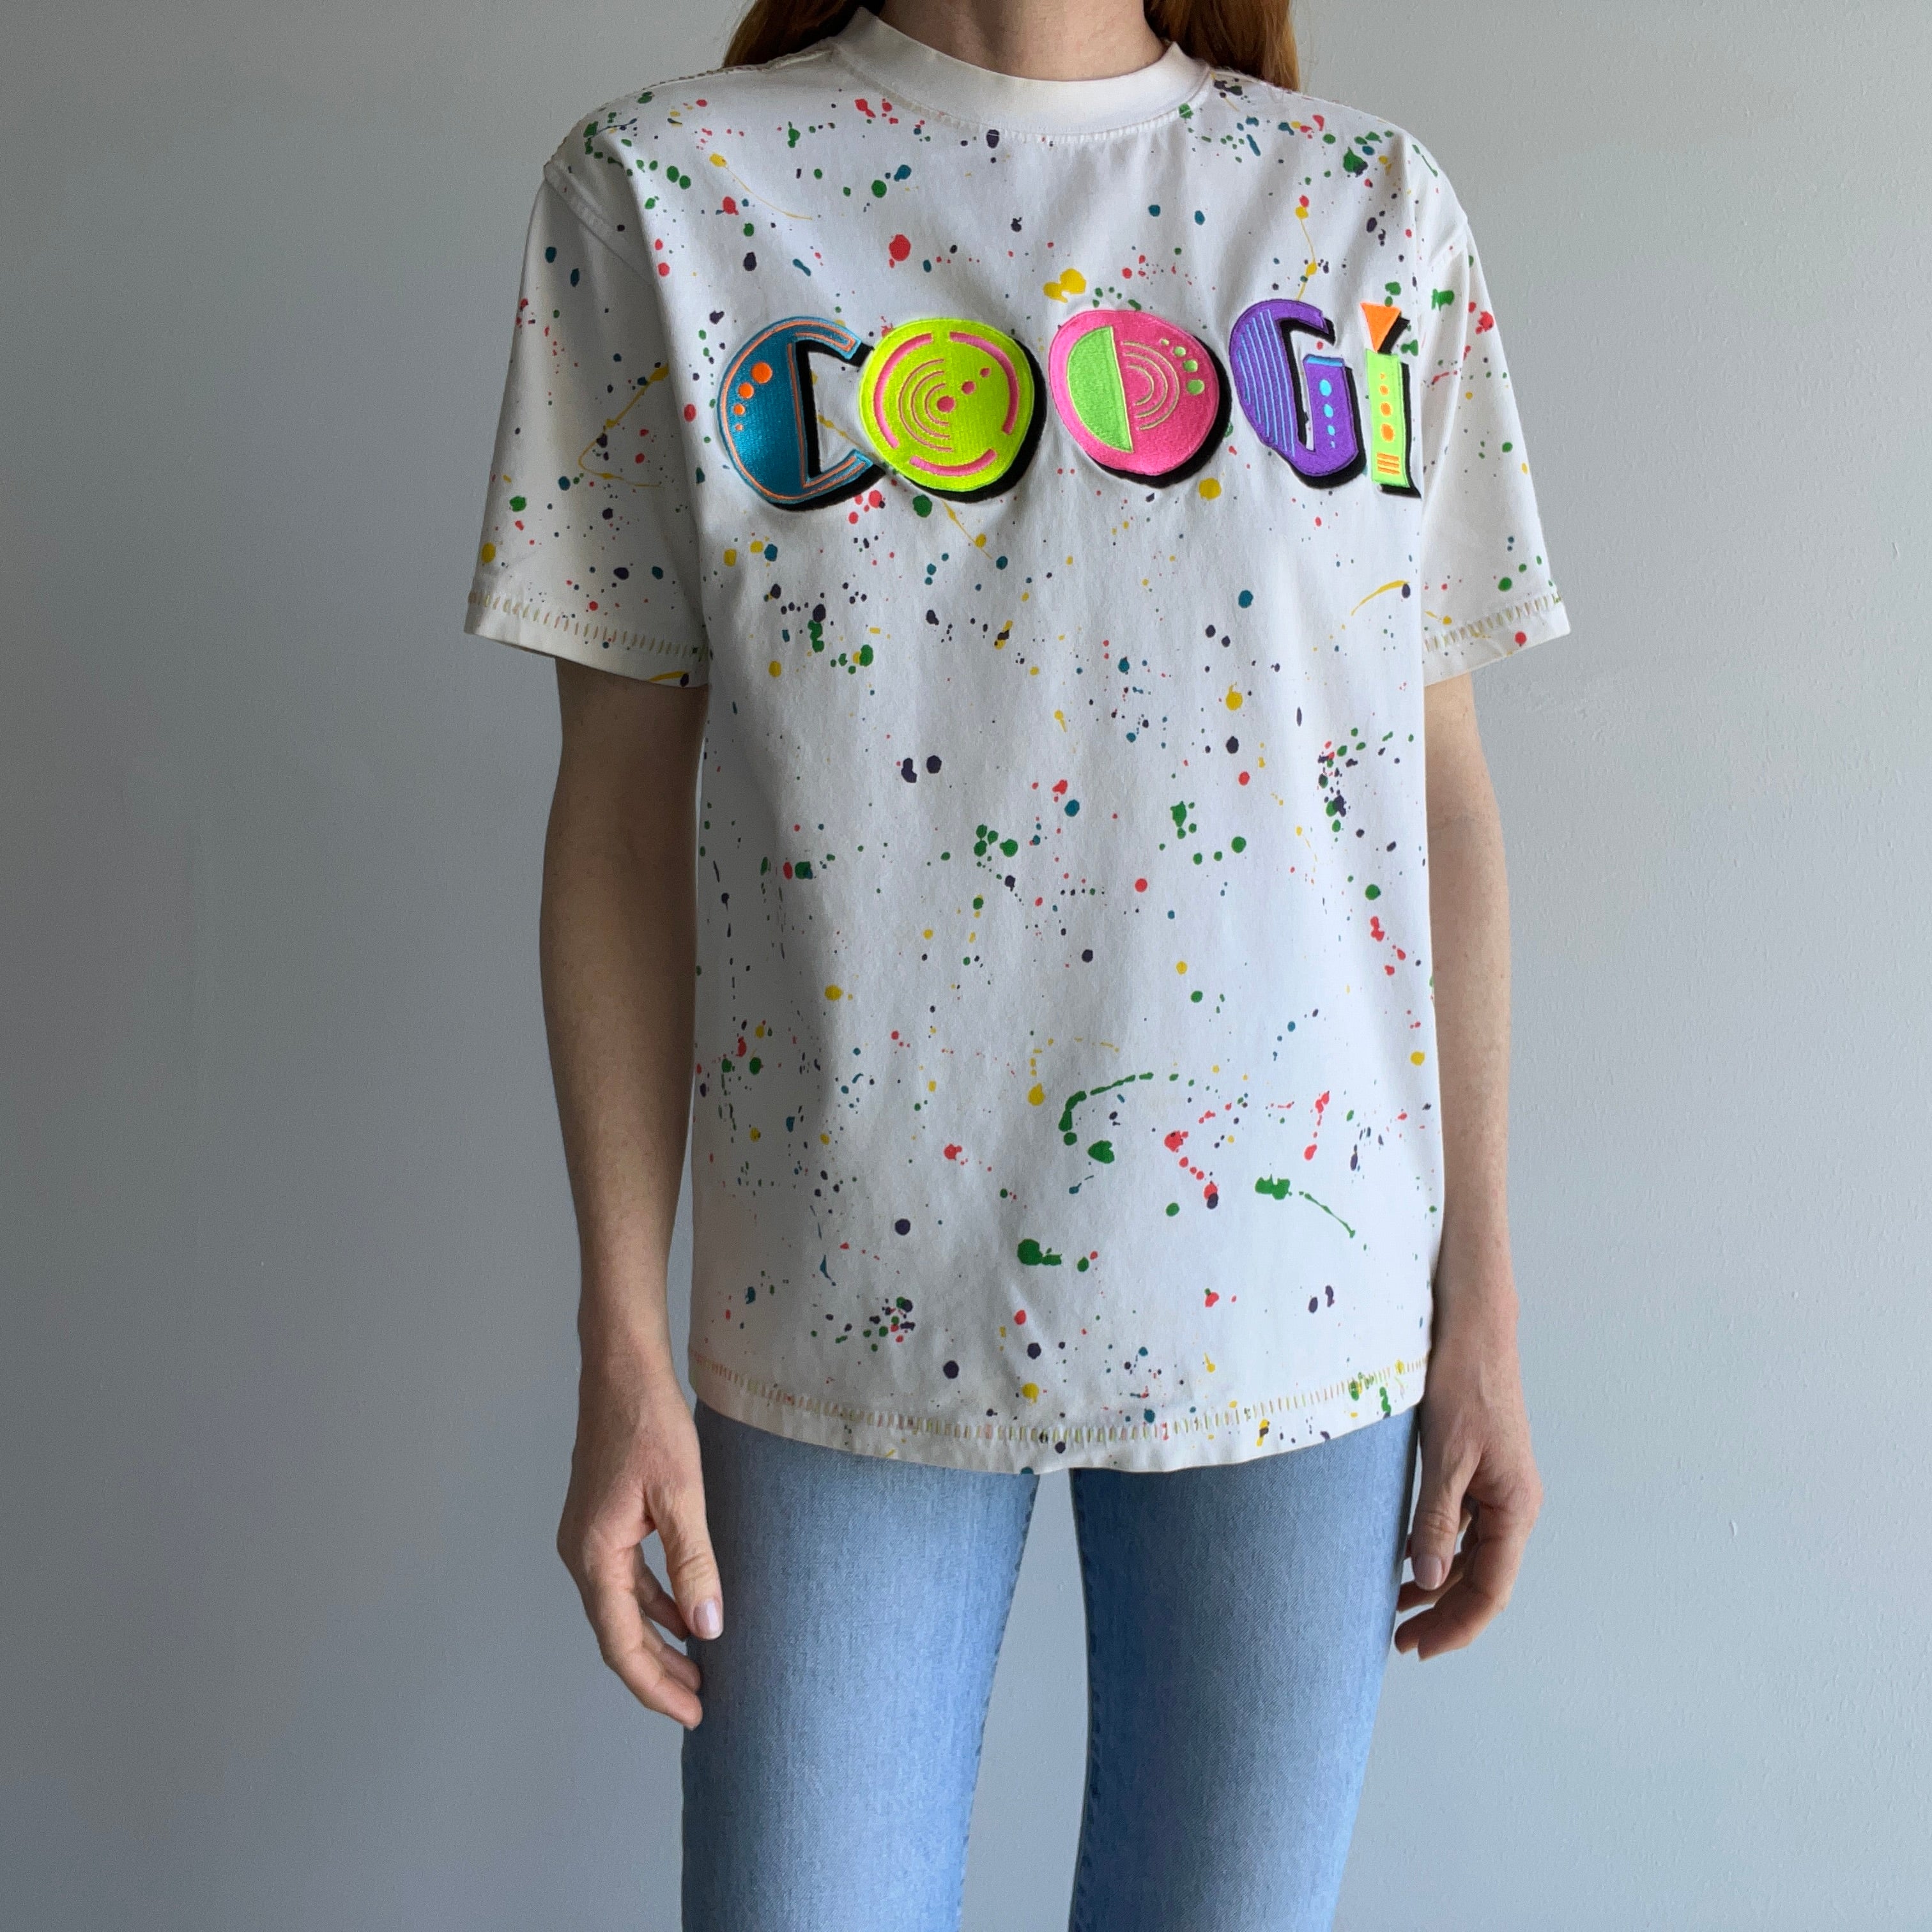 2000s COOGI T-Shirt (Not Vintage)